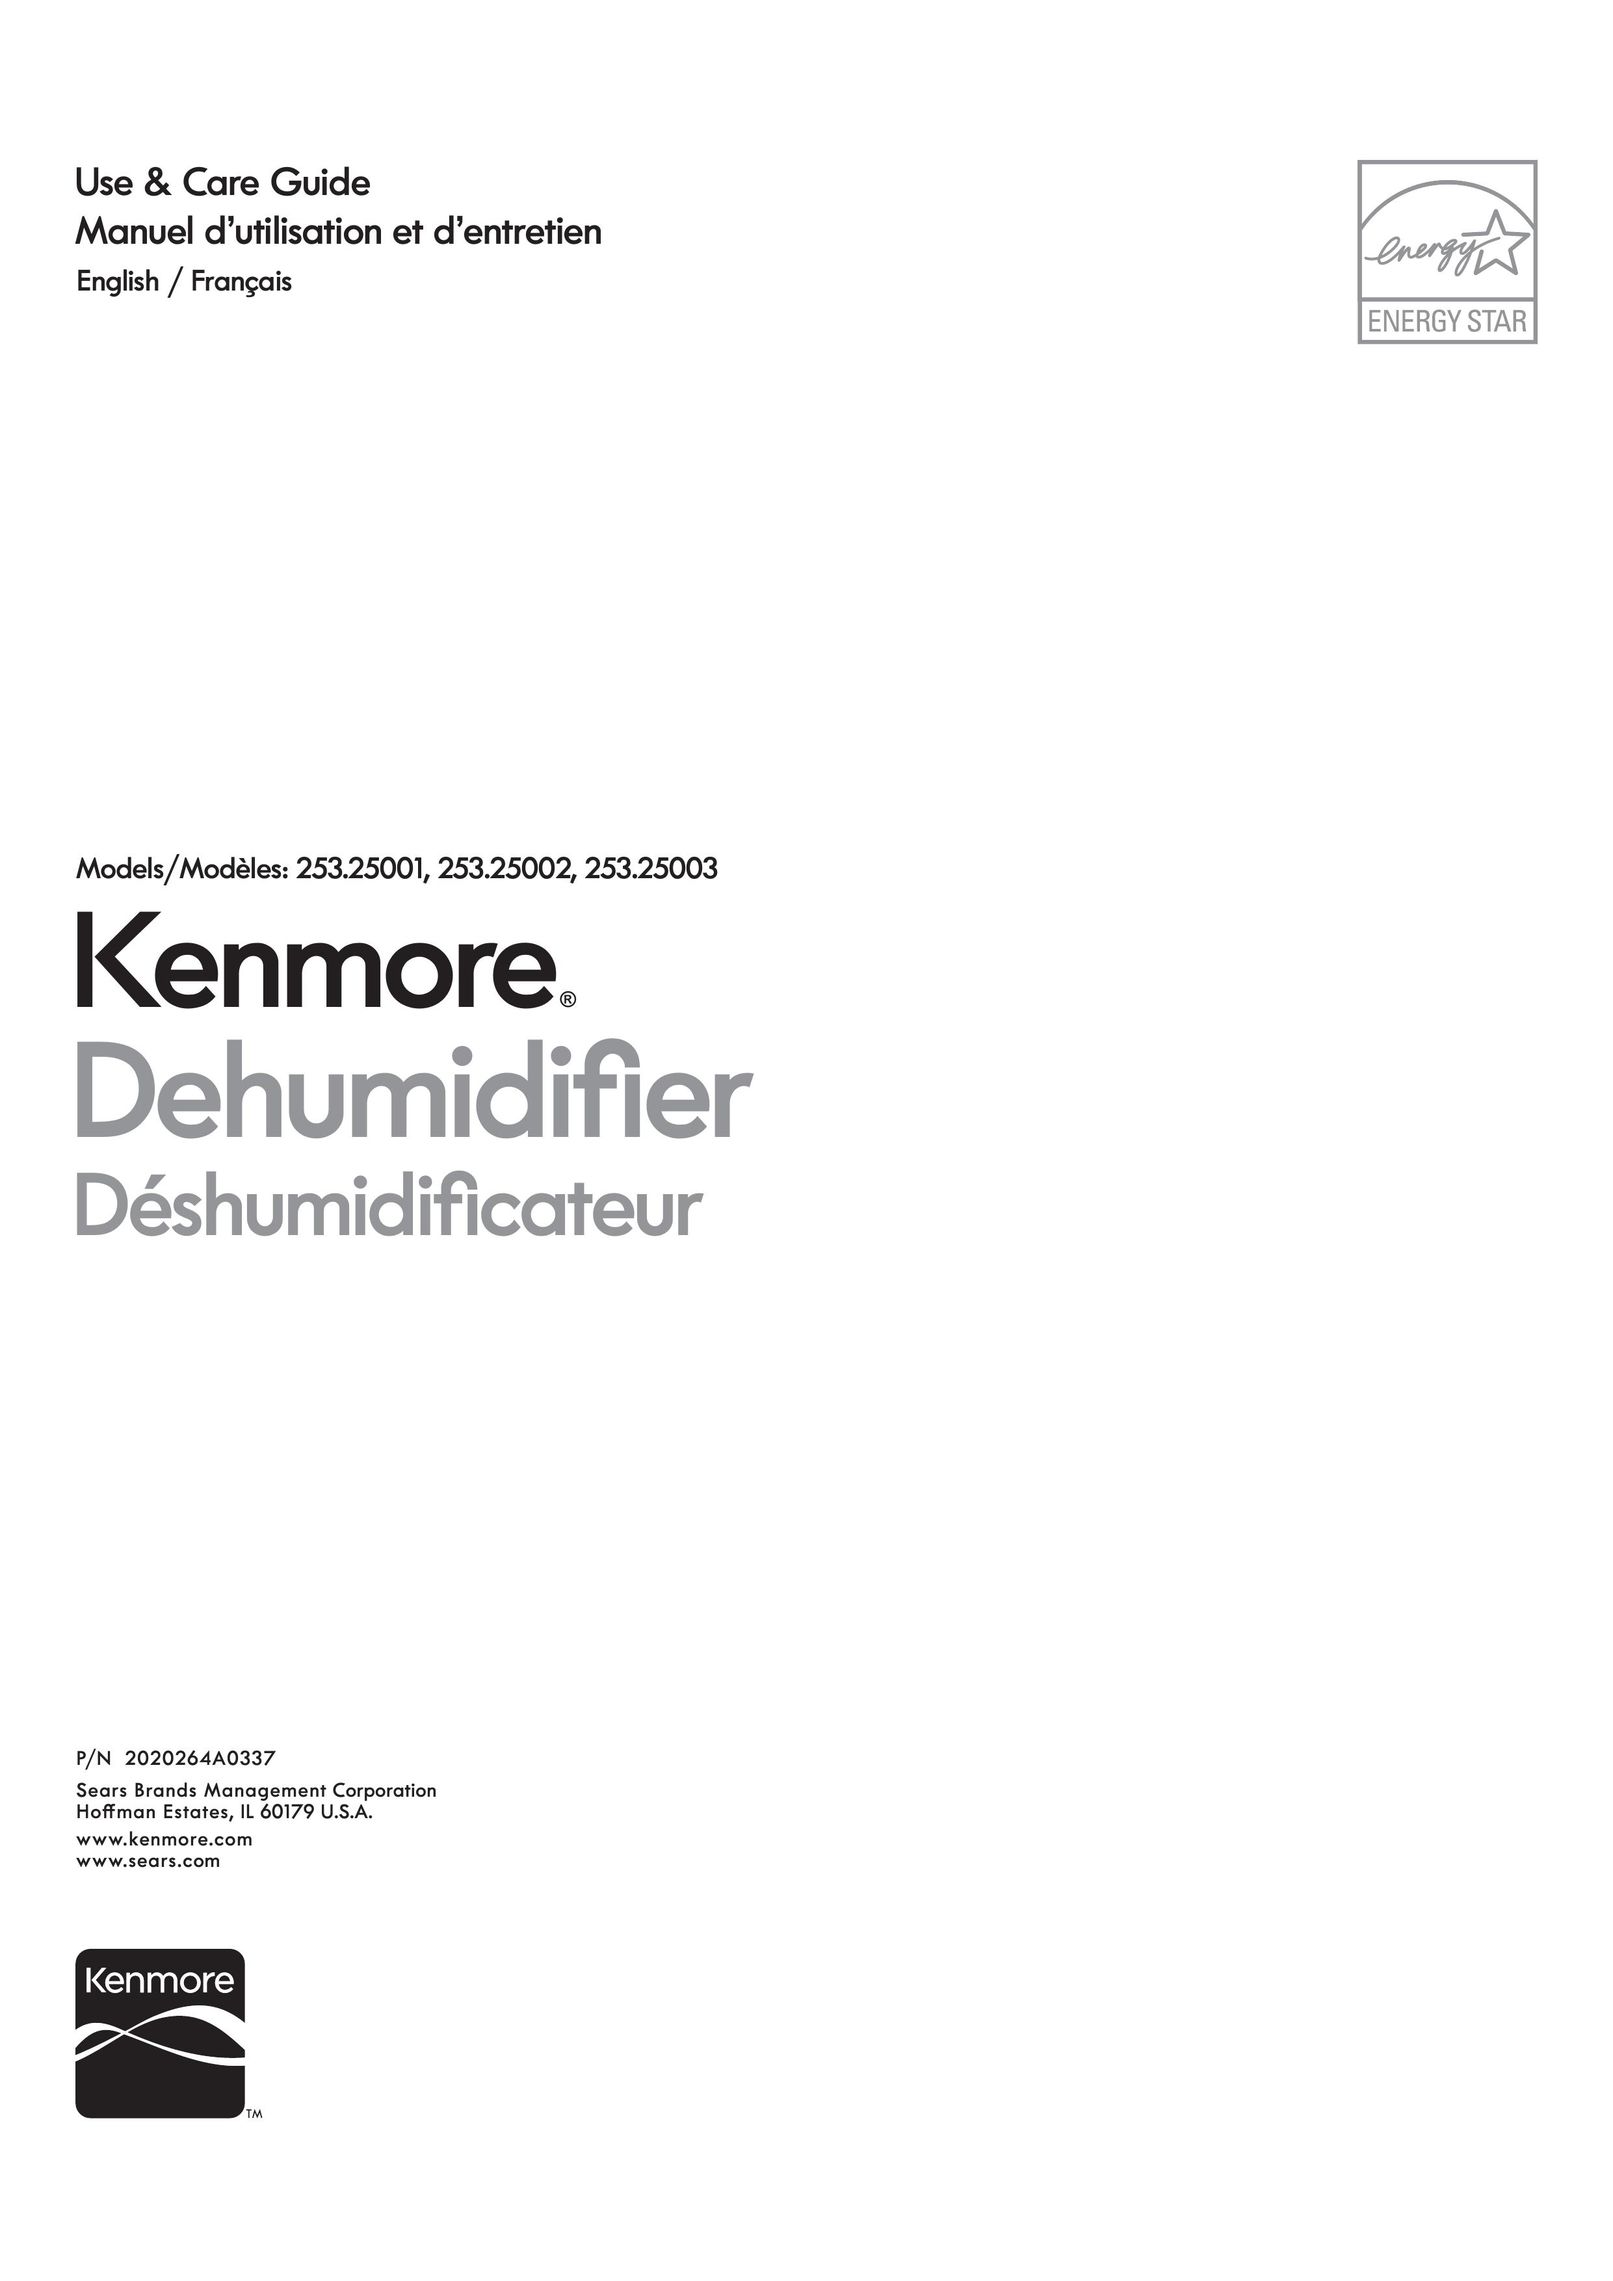 Kenmore 253.25003 Dehumidifier User Manual